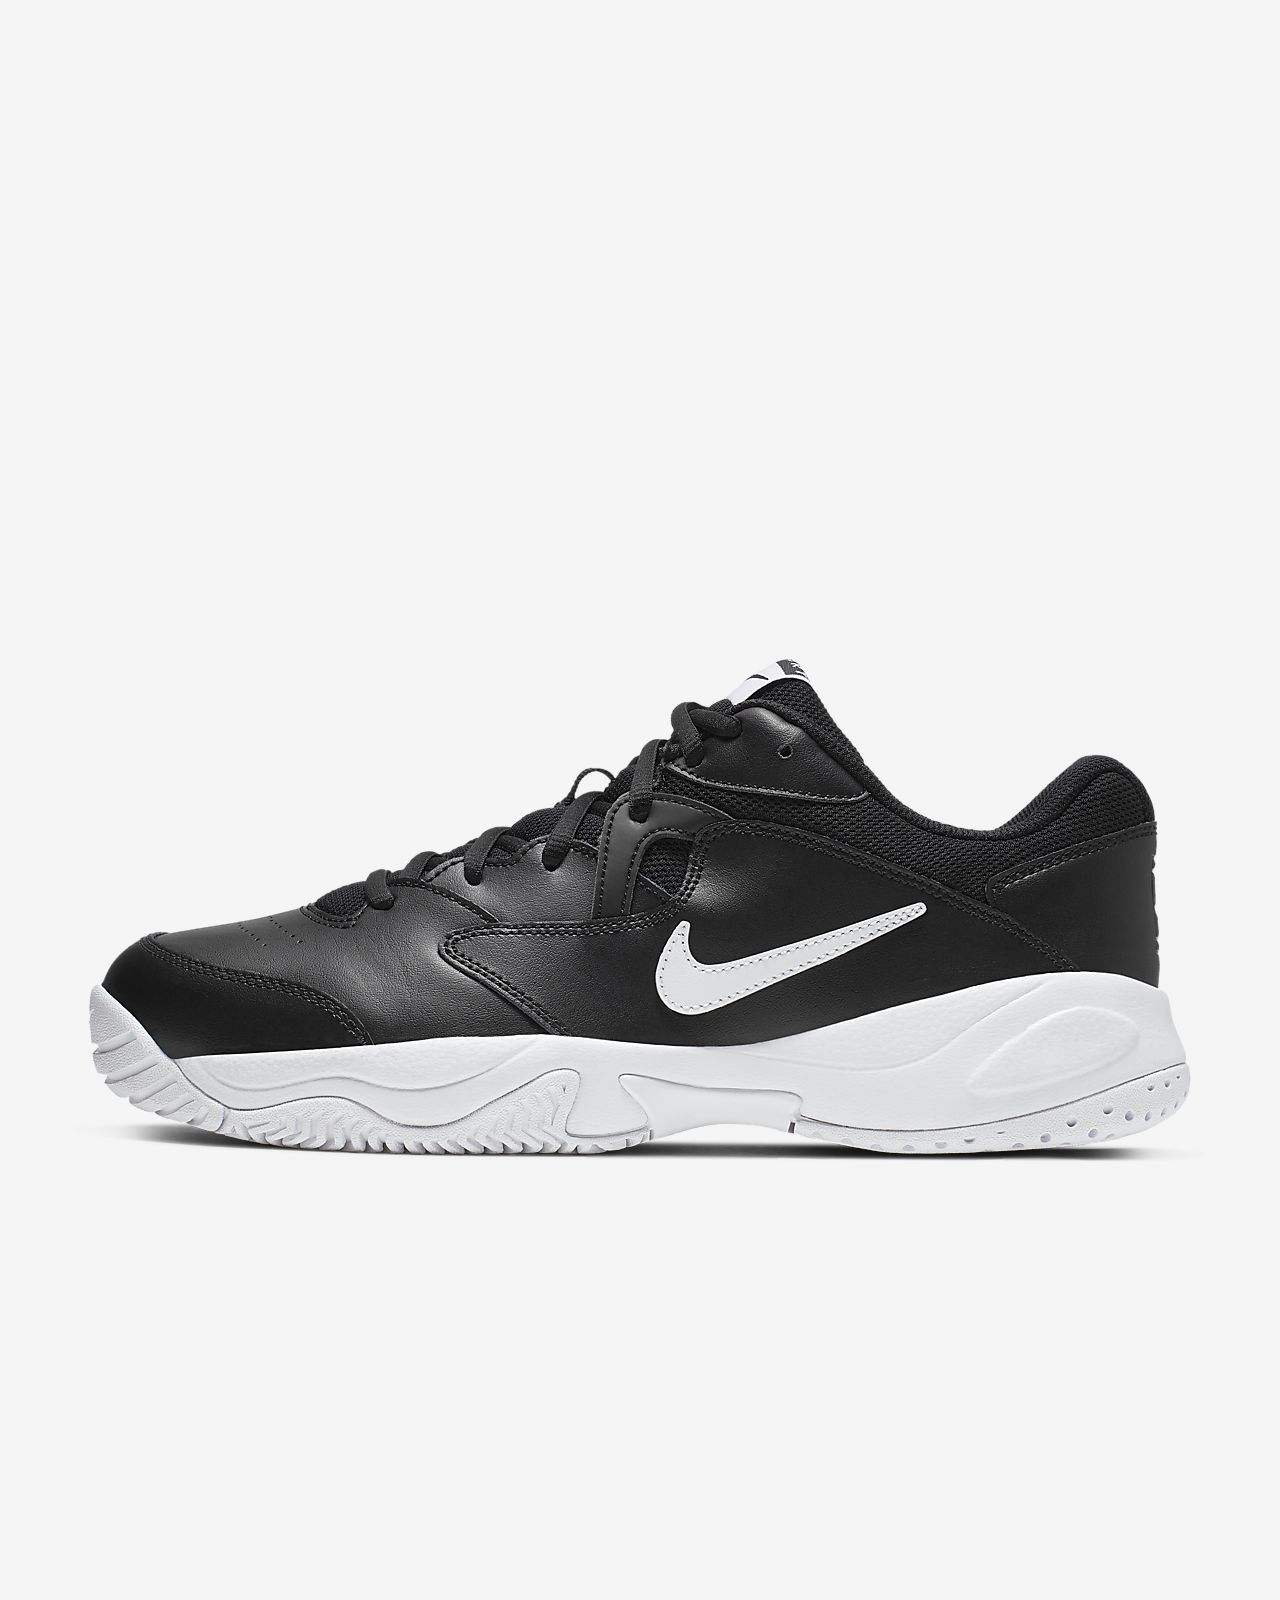 NikeCourt Lite 2 Men's Hard Court Tennis Shoe. Nike PT